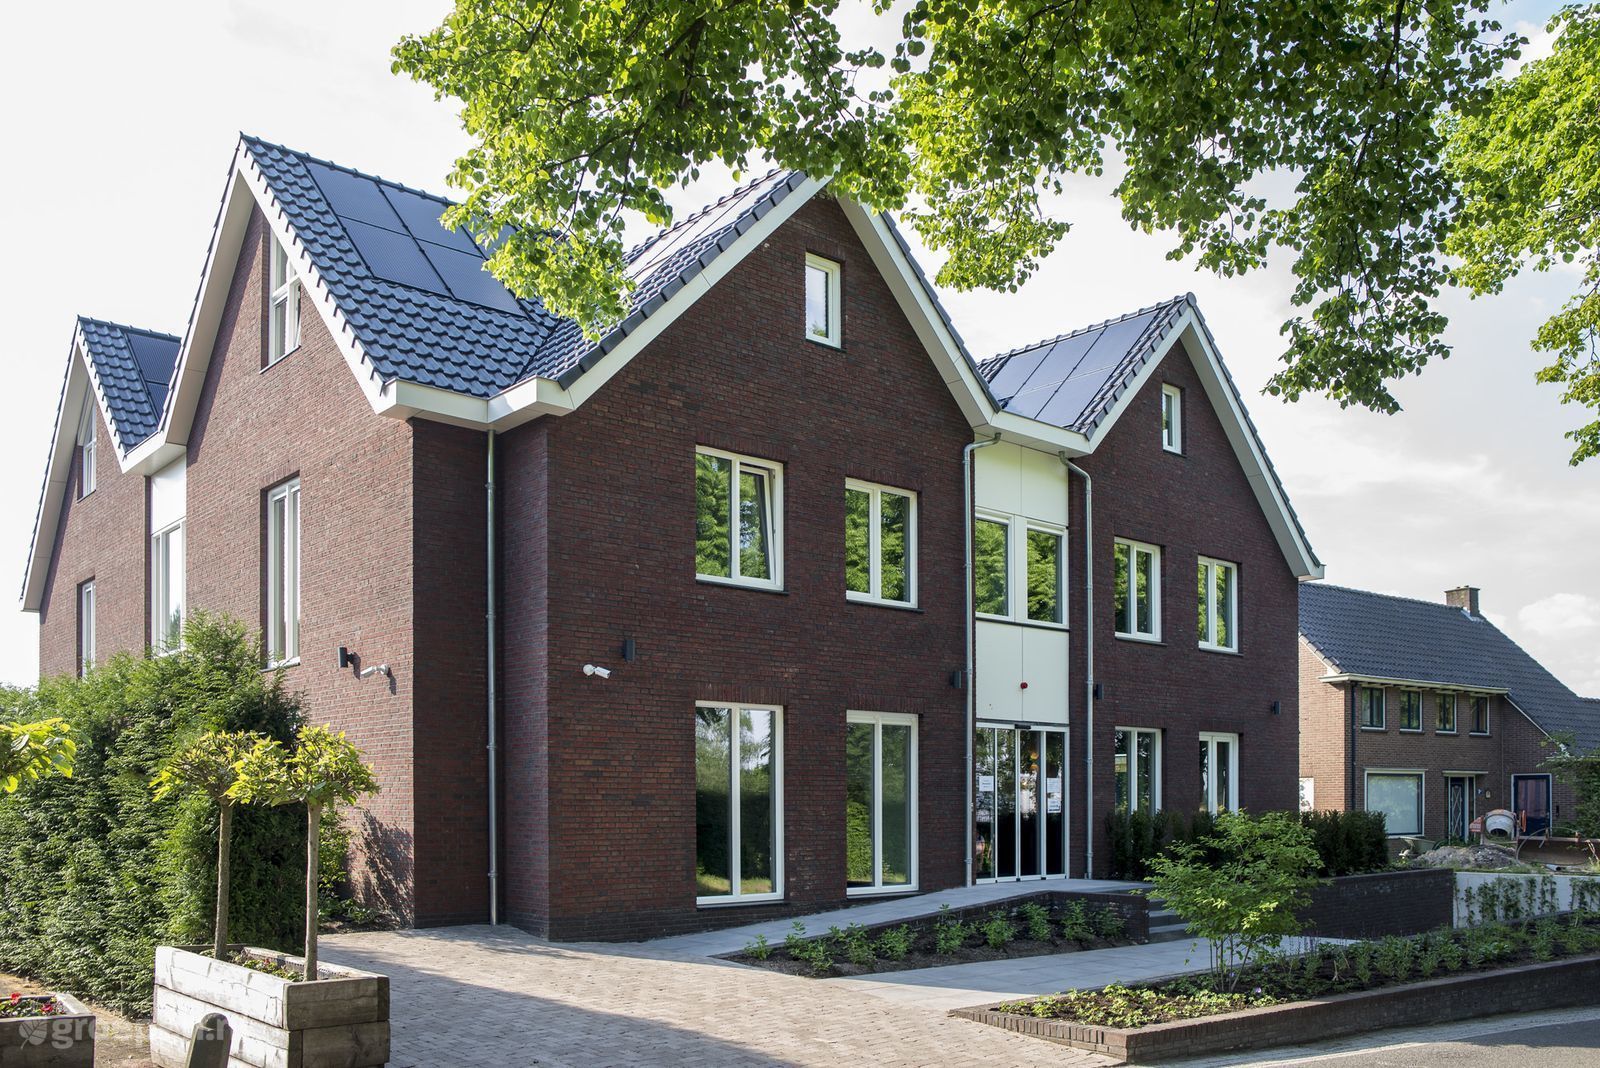 Group accommodation Groesbeek